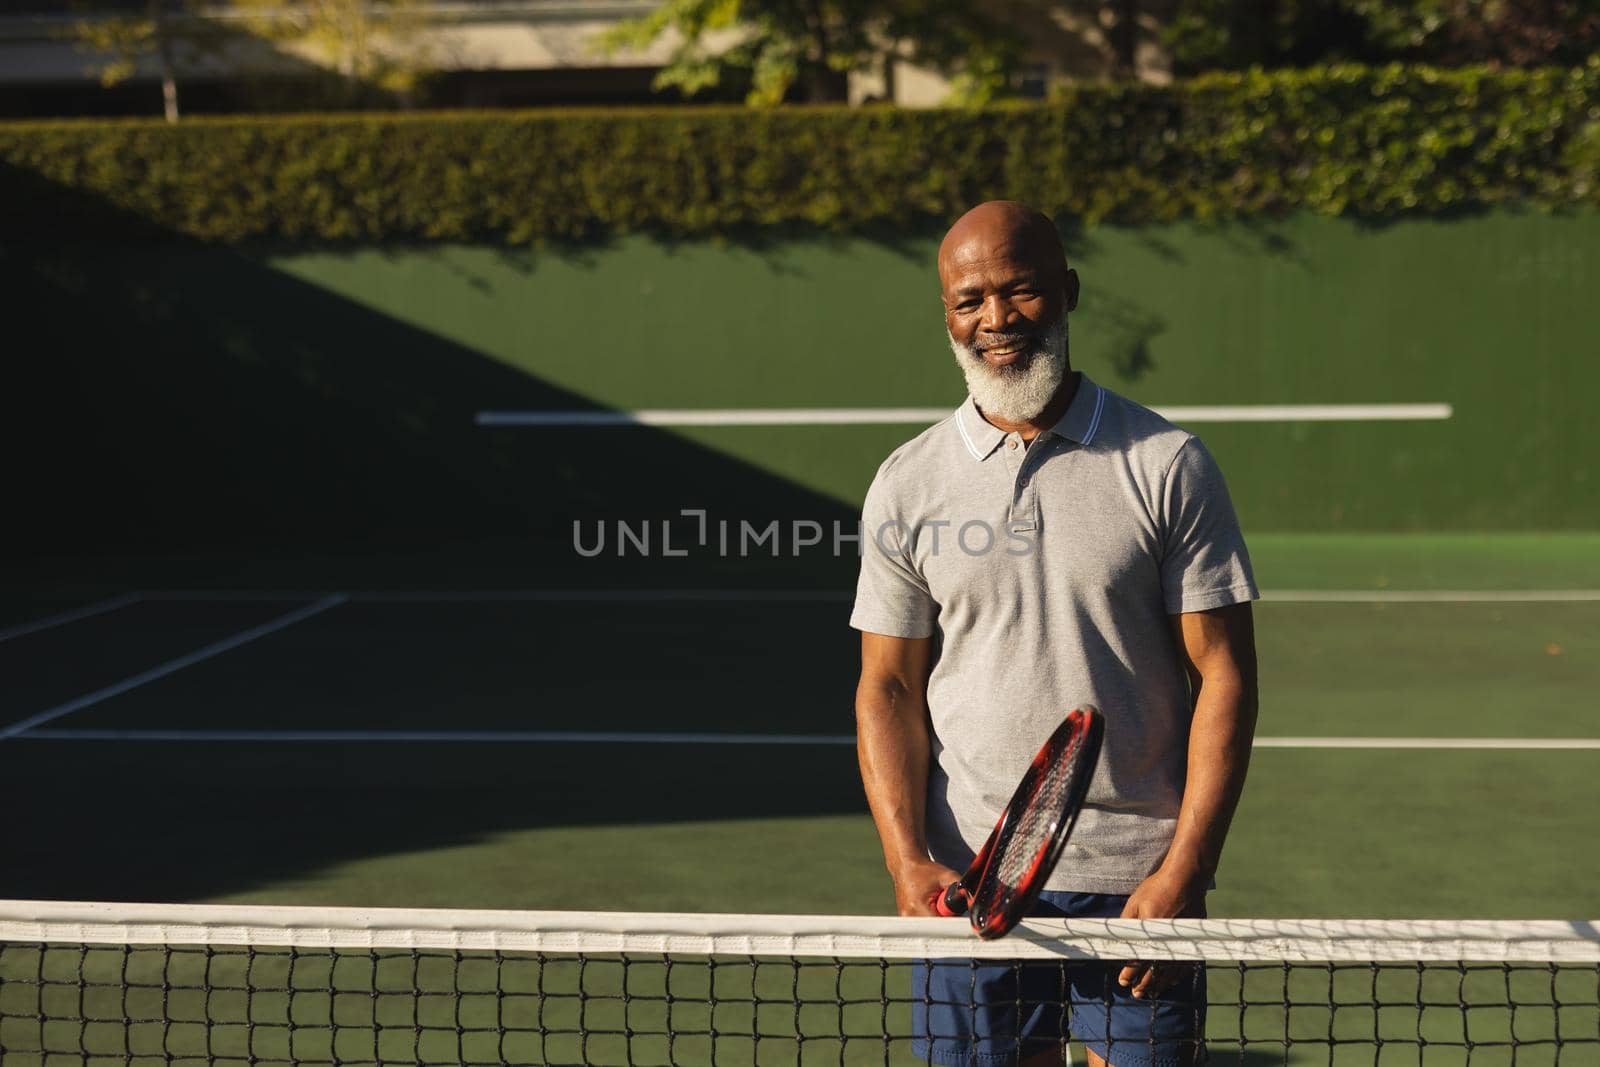 Portrait of smiling senior african american man holding tennis racket on tennis court by Wavebreakmedia